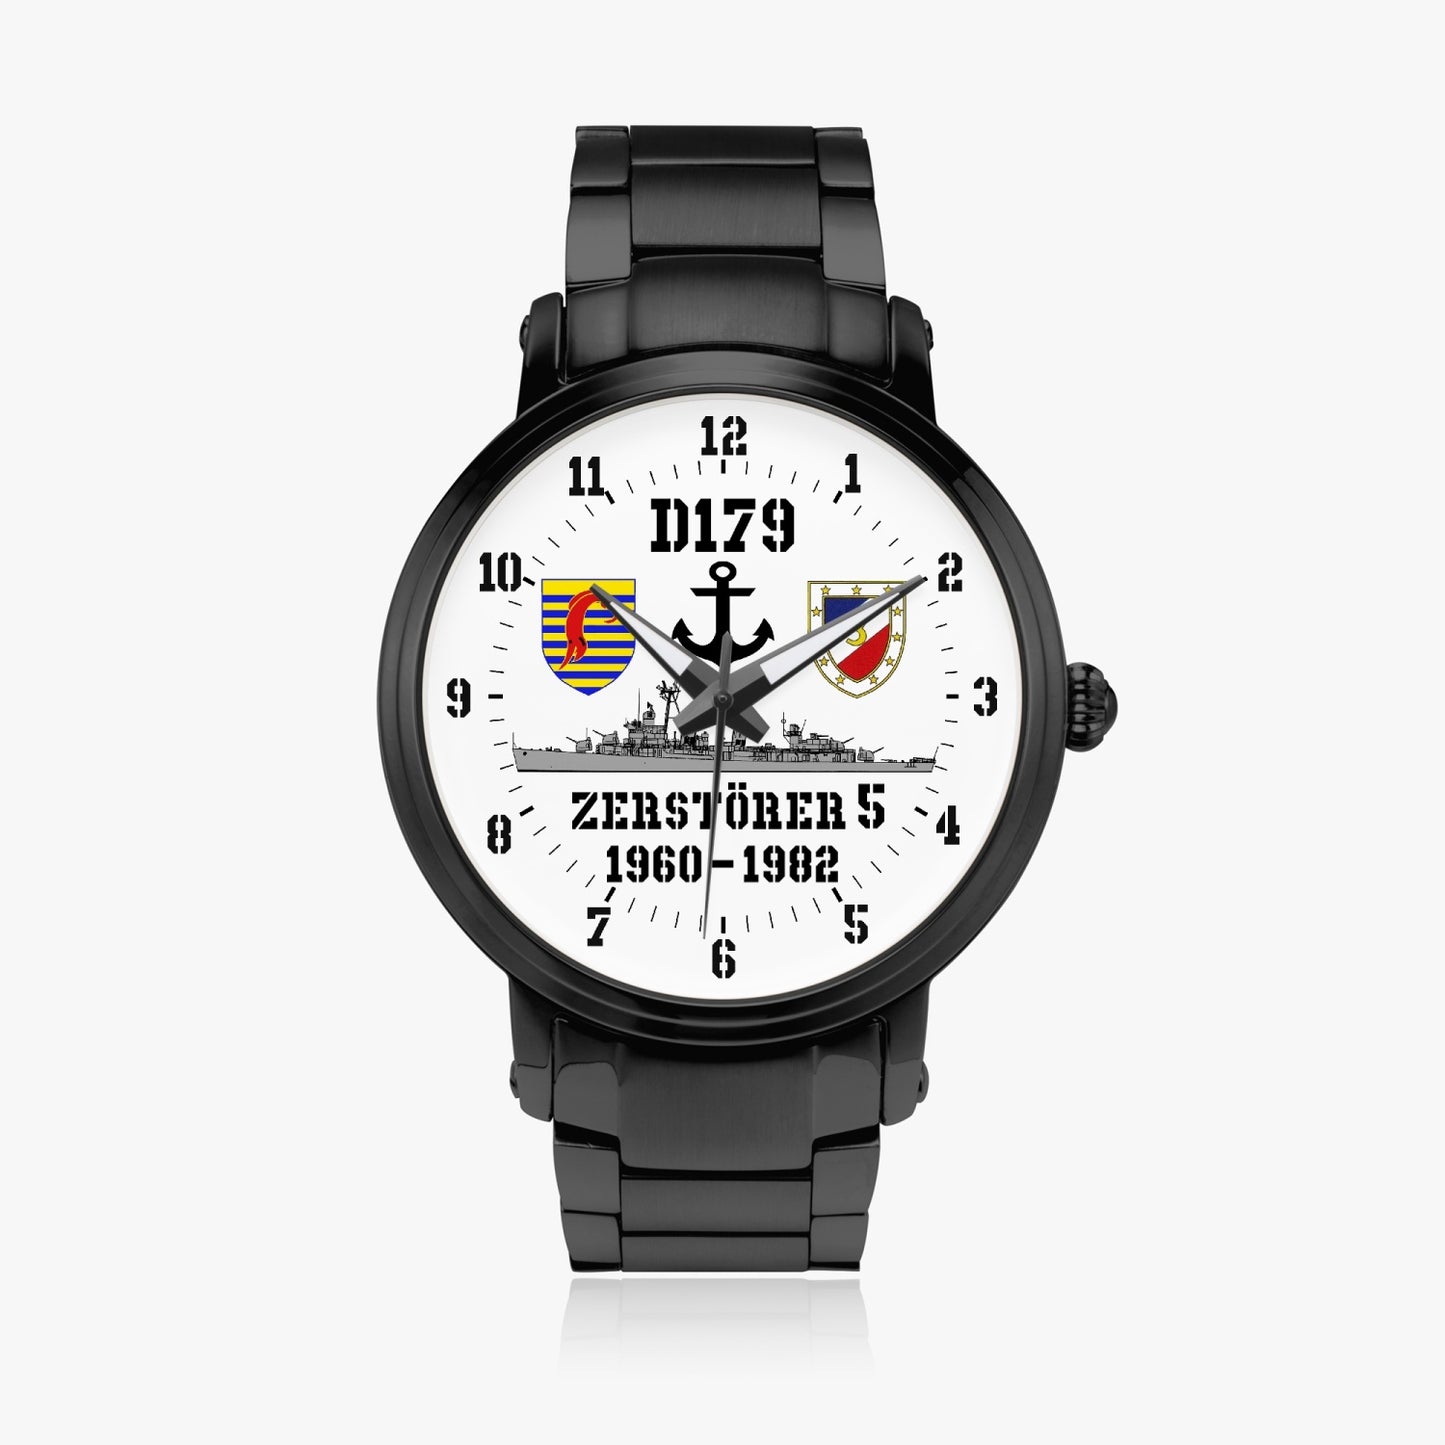 Armbanduhr D179 ZERSTÖRER 5 - Automatik